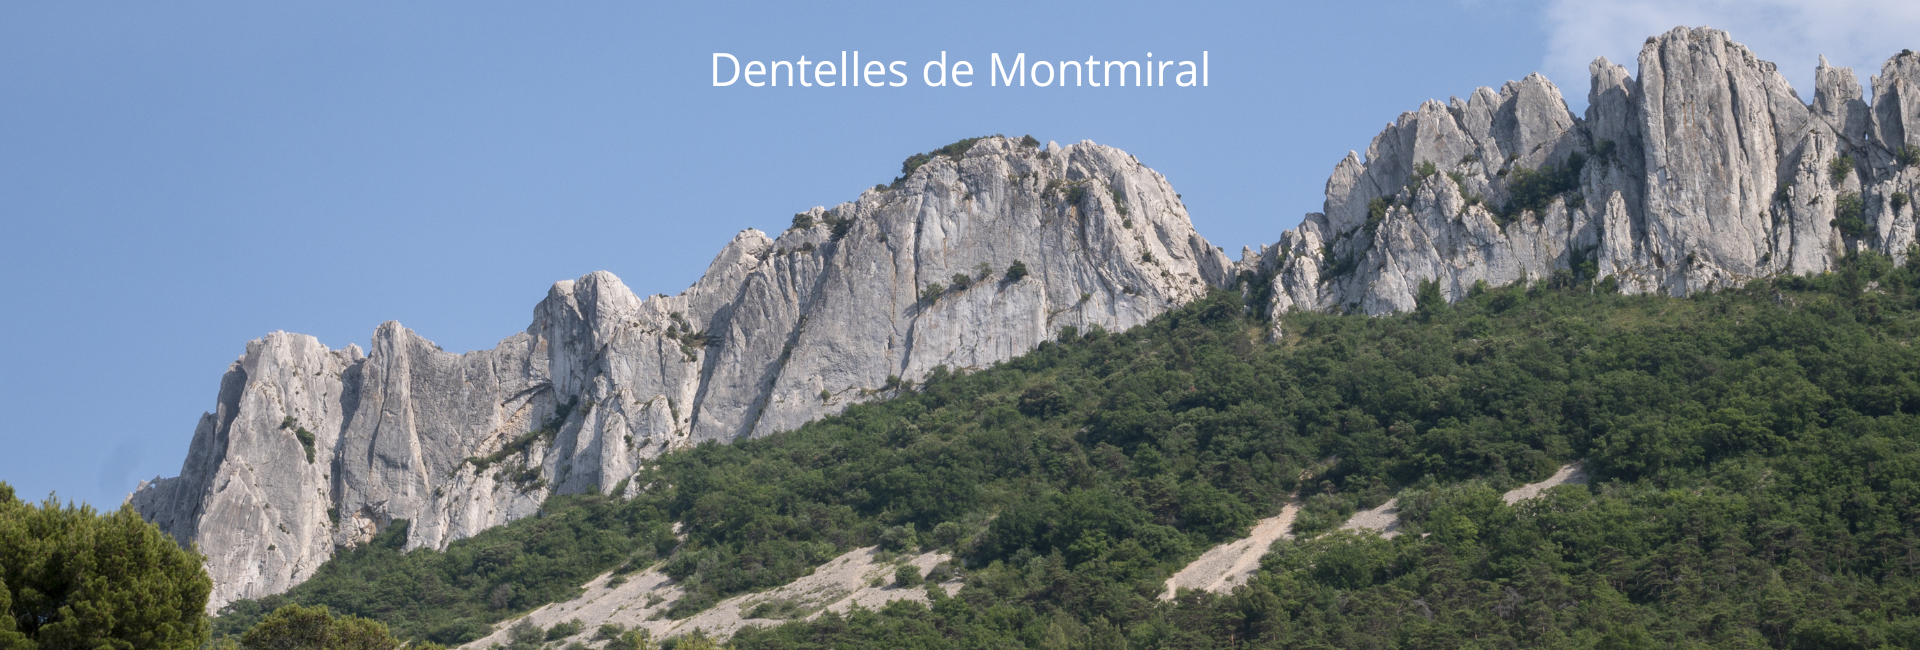 Dentelles de Montmirail